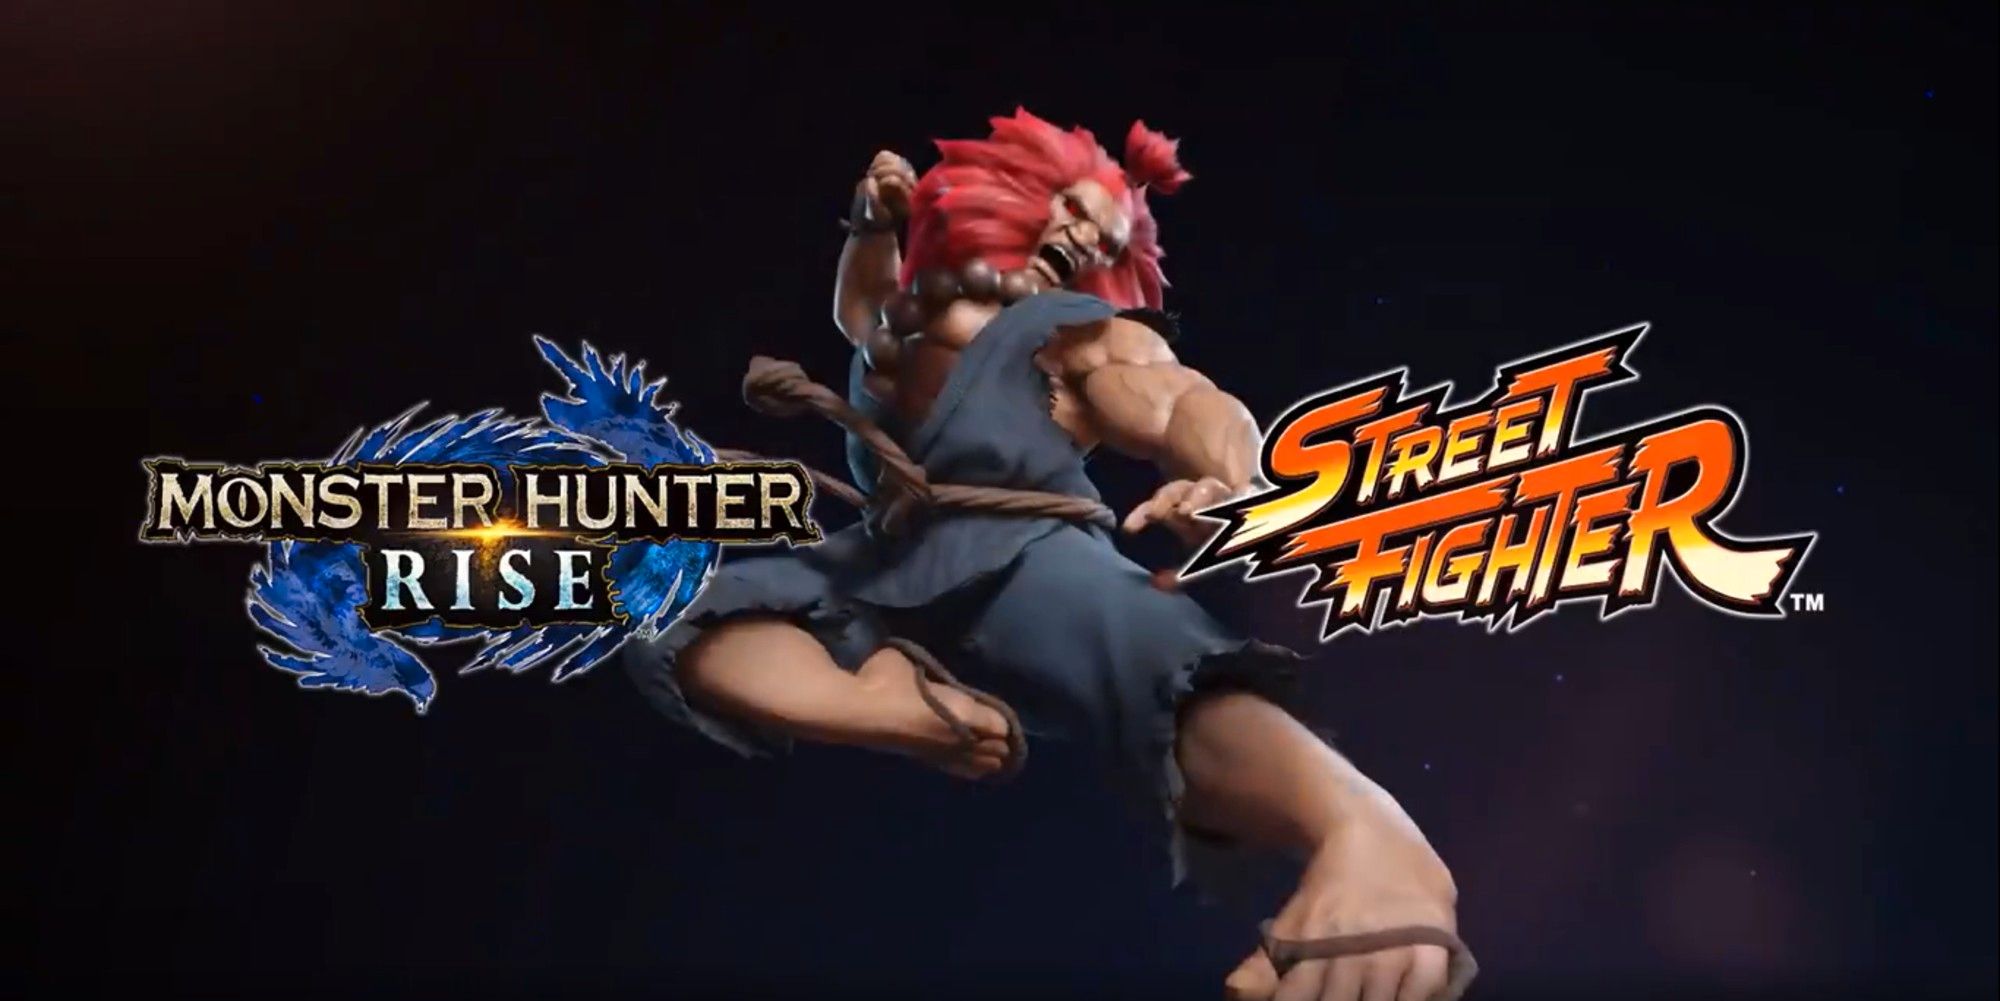 Monster Hunter Tulai Akuma Street Fighter